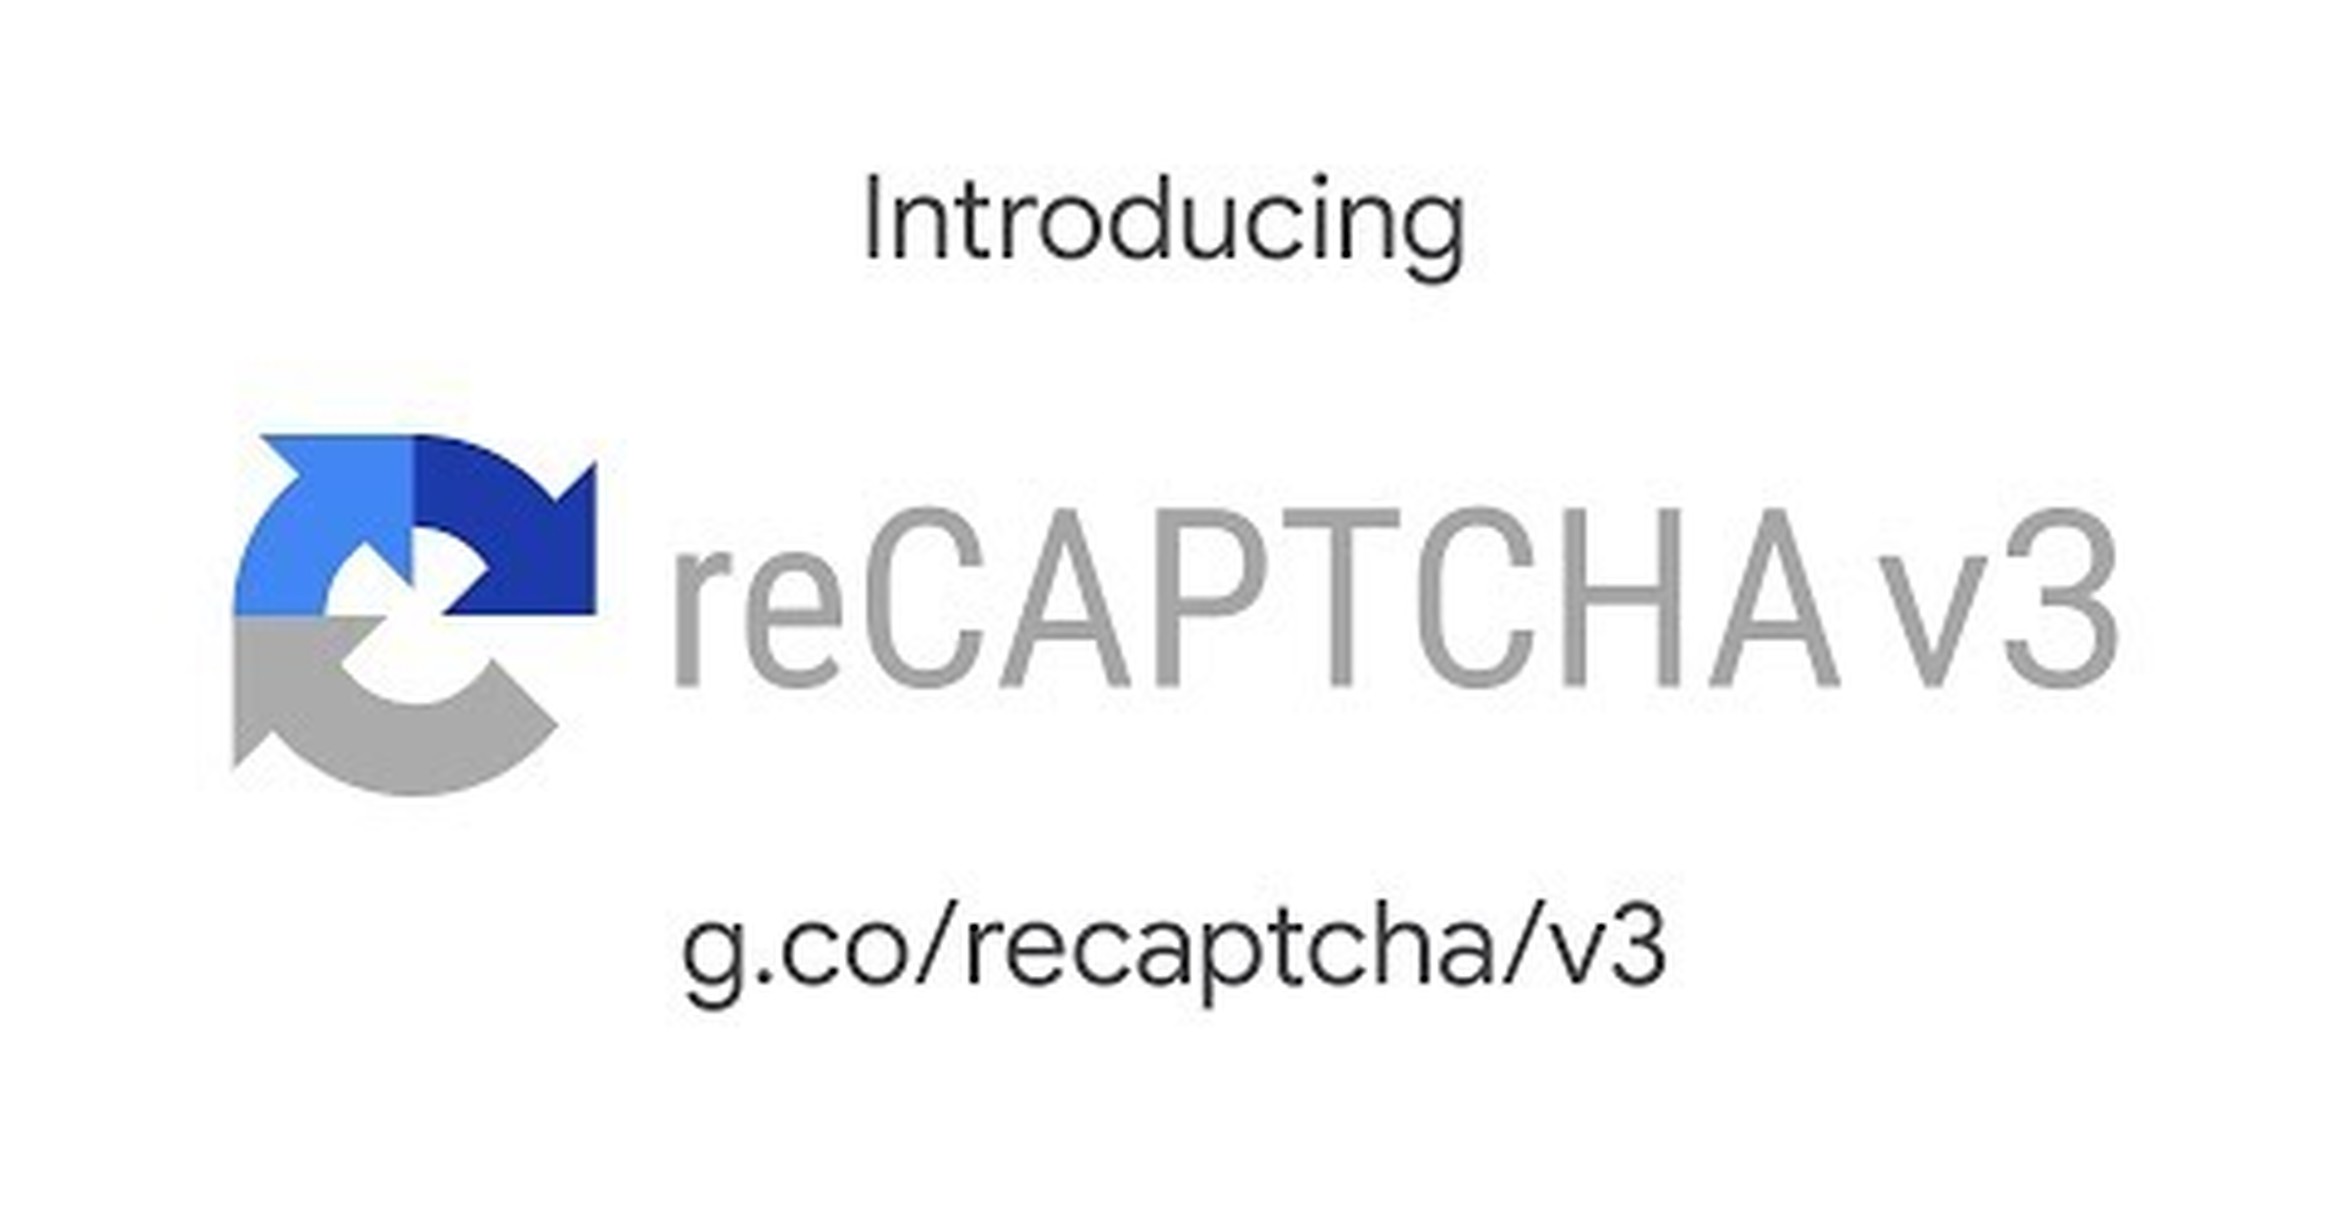 Recaptcha что это. RECAPTCHA v3. RECAPTCHA 3. Google captcha v3. RECAPTCHA v3 как выглядит.